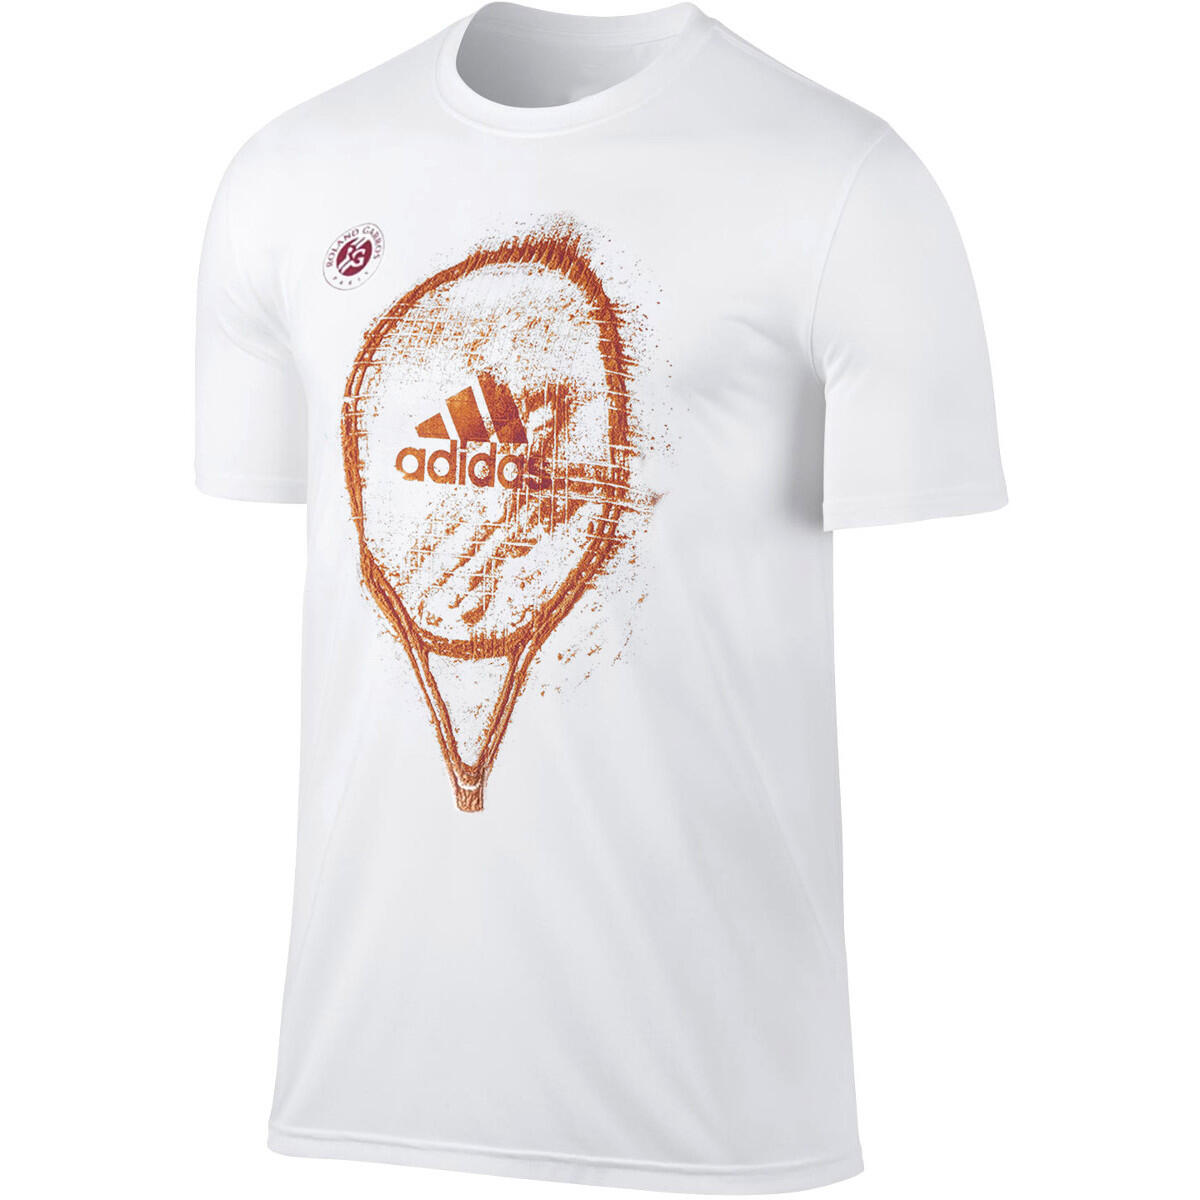 adidas tennis shirt